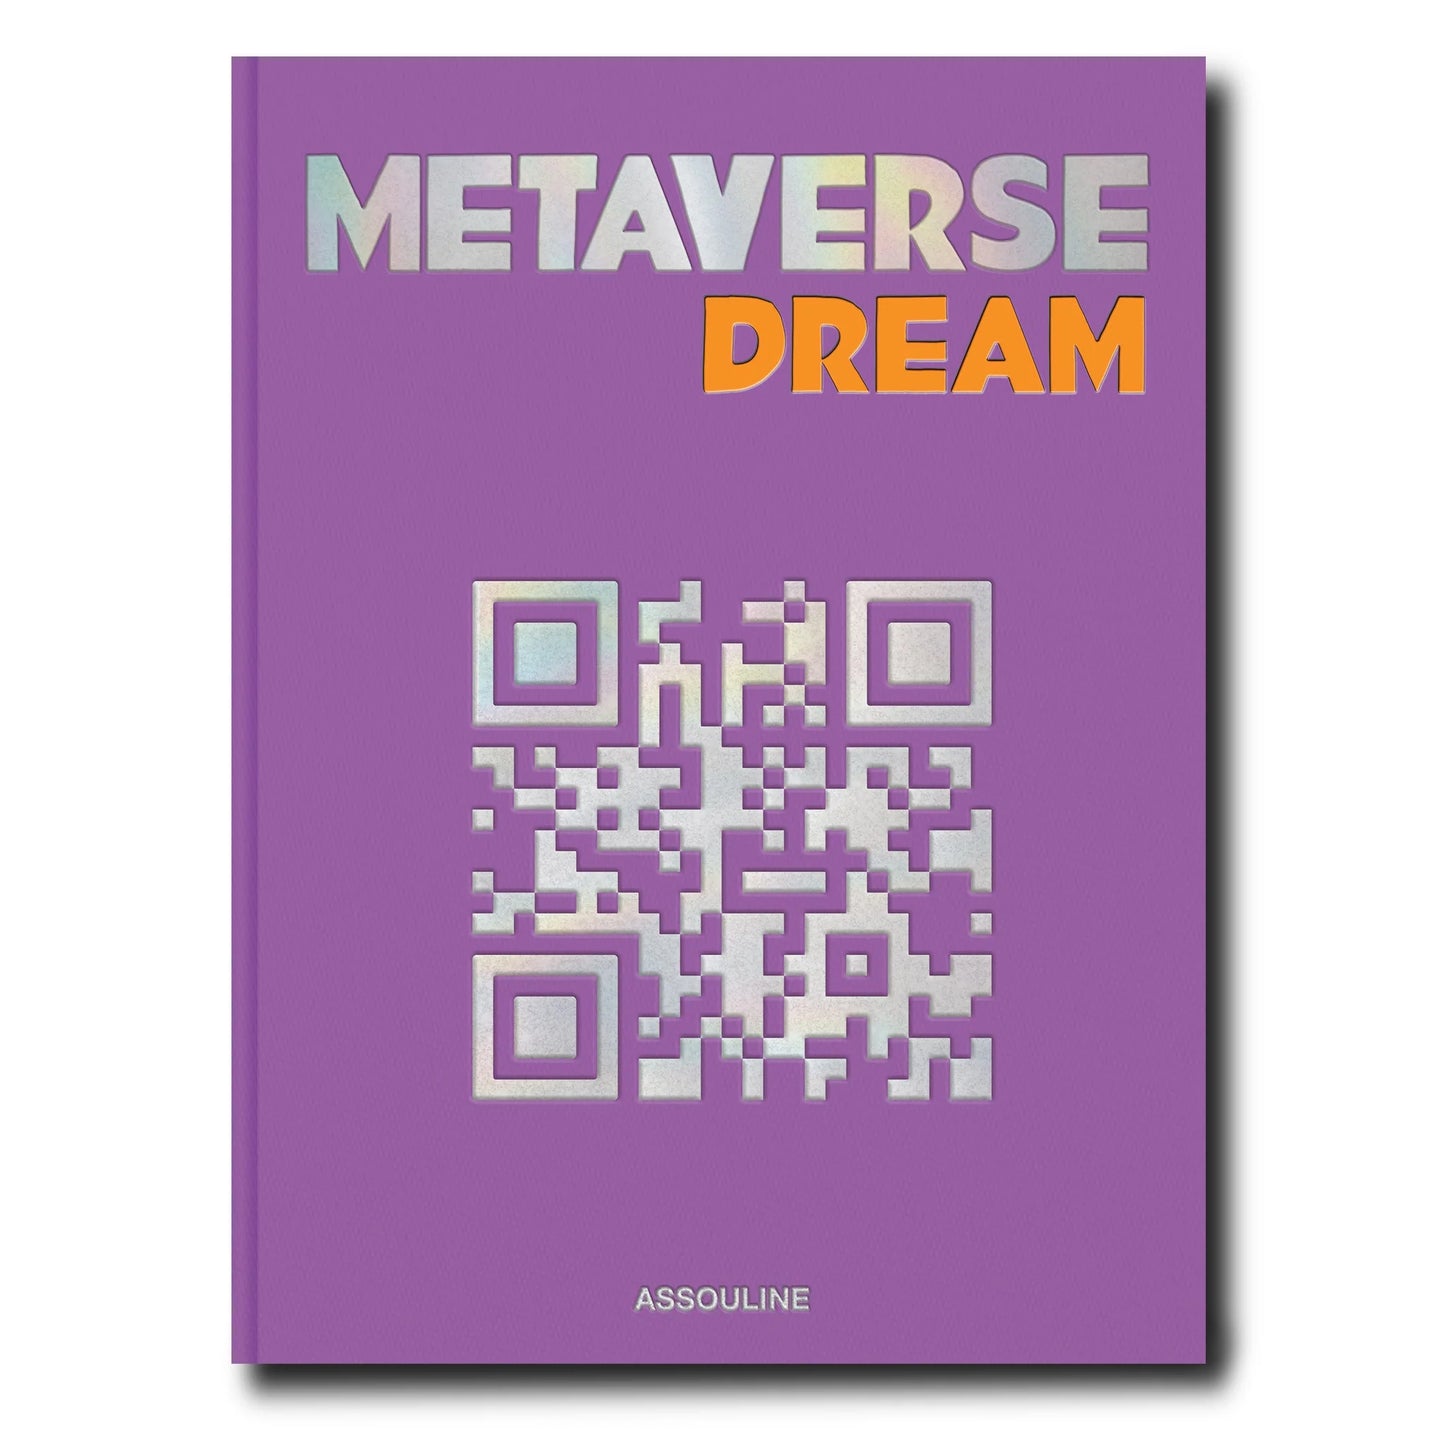 Metaverse-Traumbuch